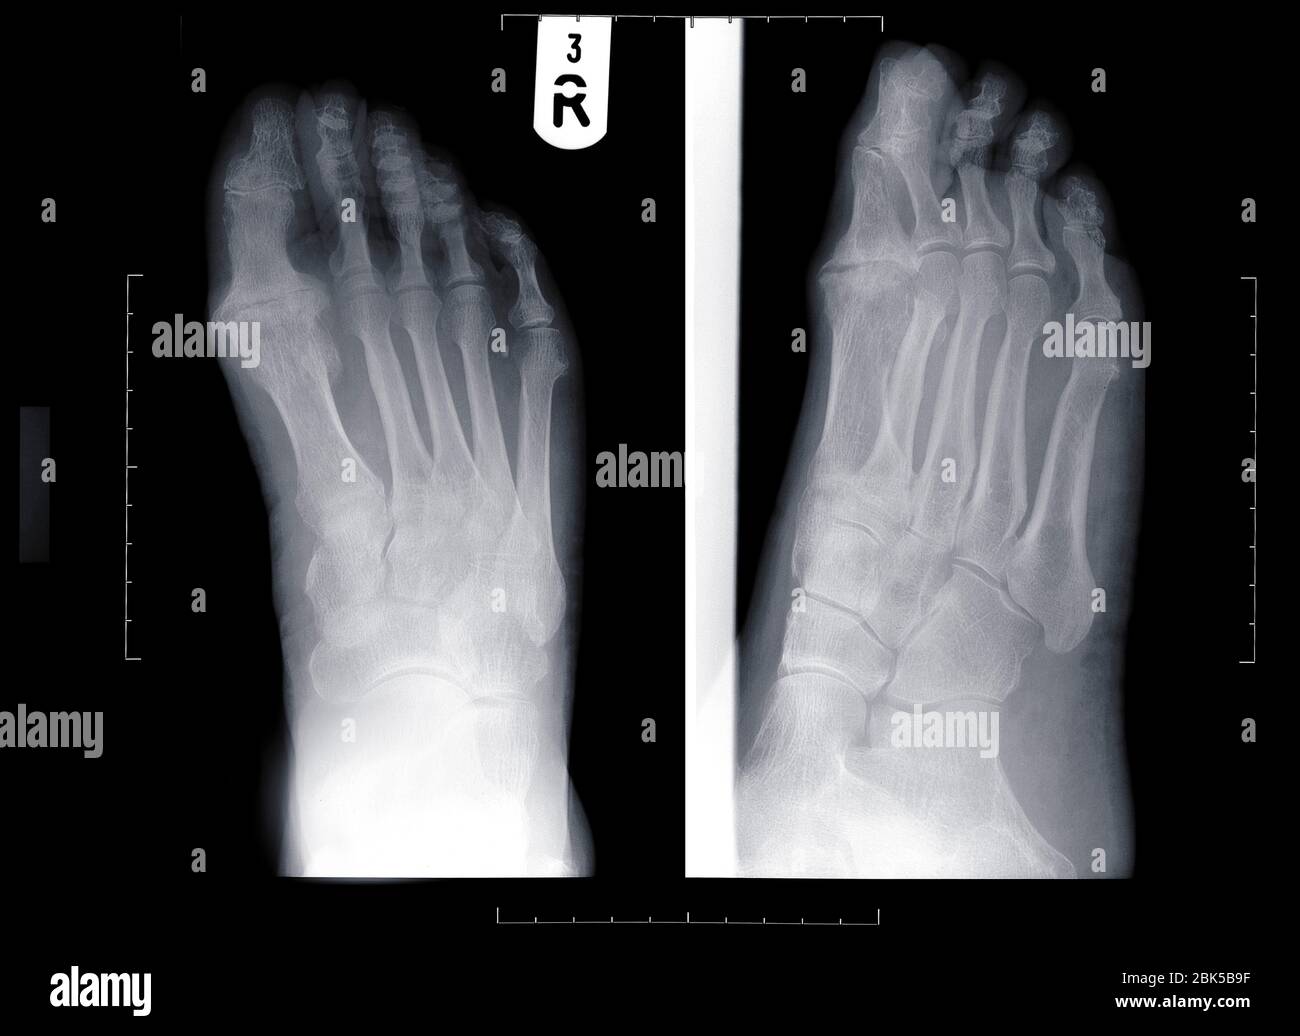 Human feet, X-ray. Stock Photo